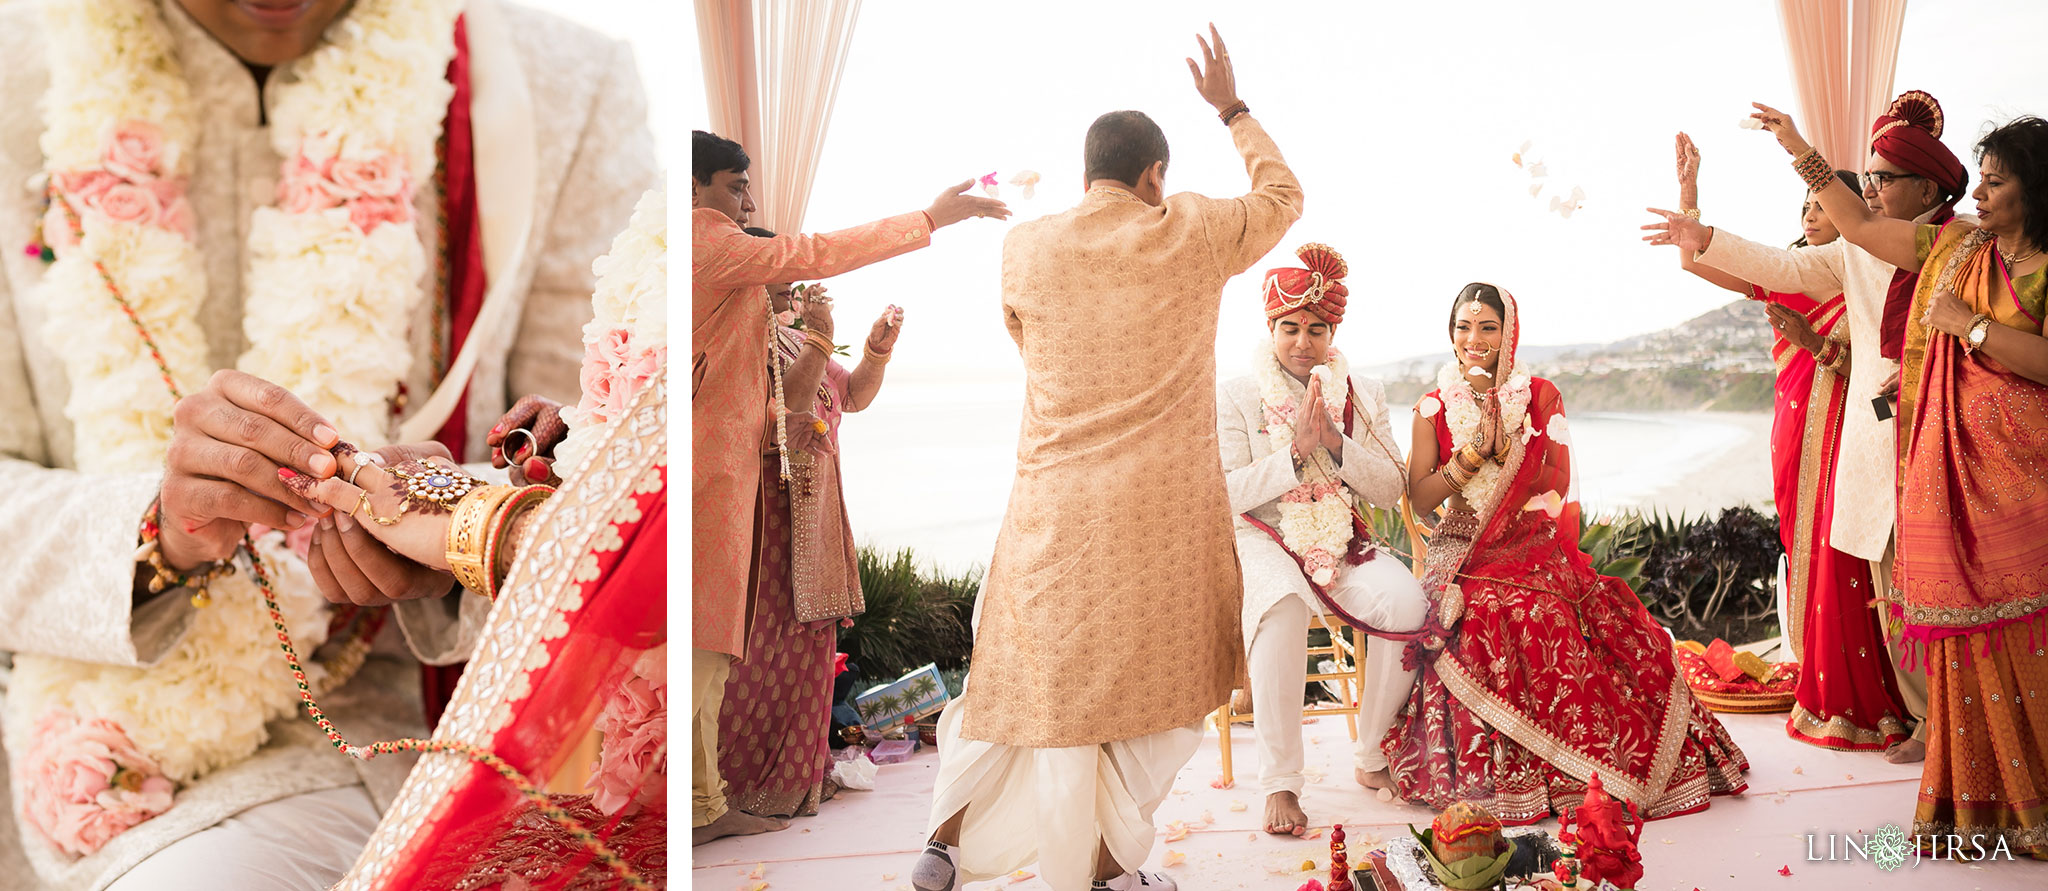 28 ritz carlton laguna niguel indian wedding ceremony photography